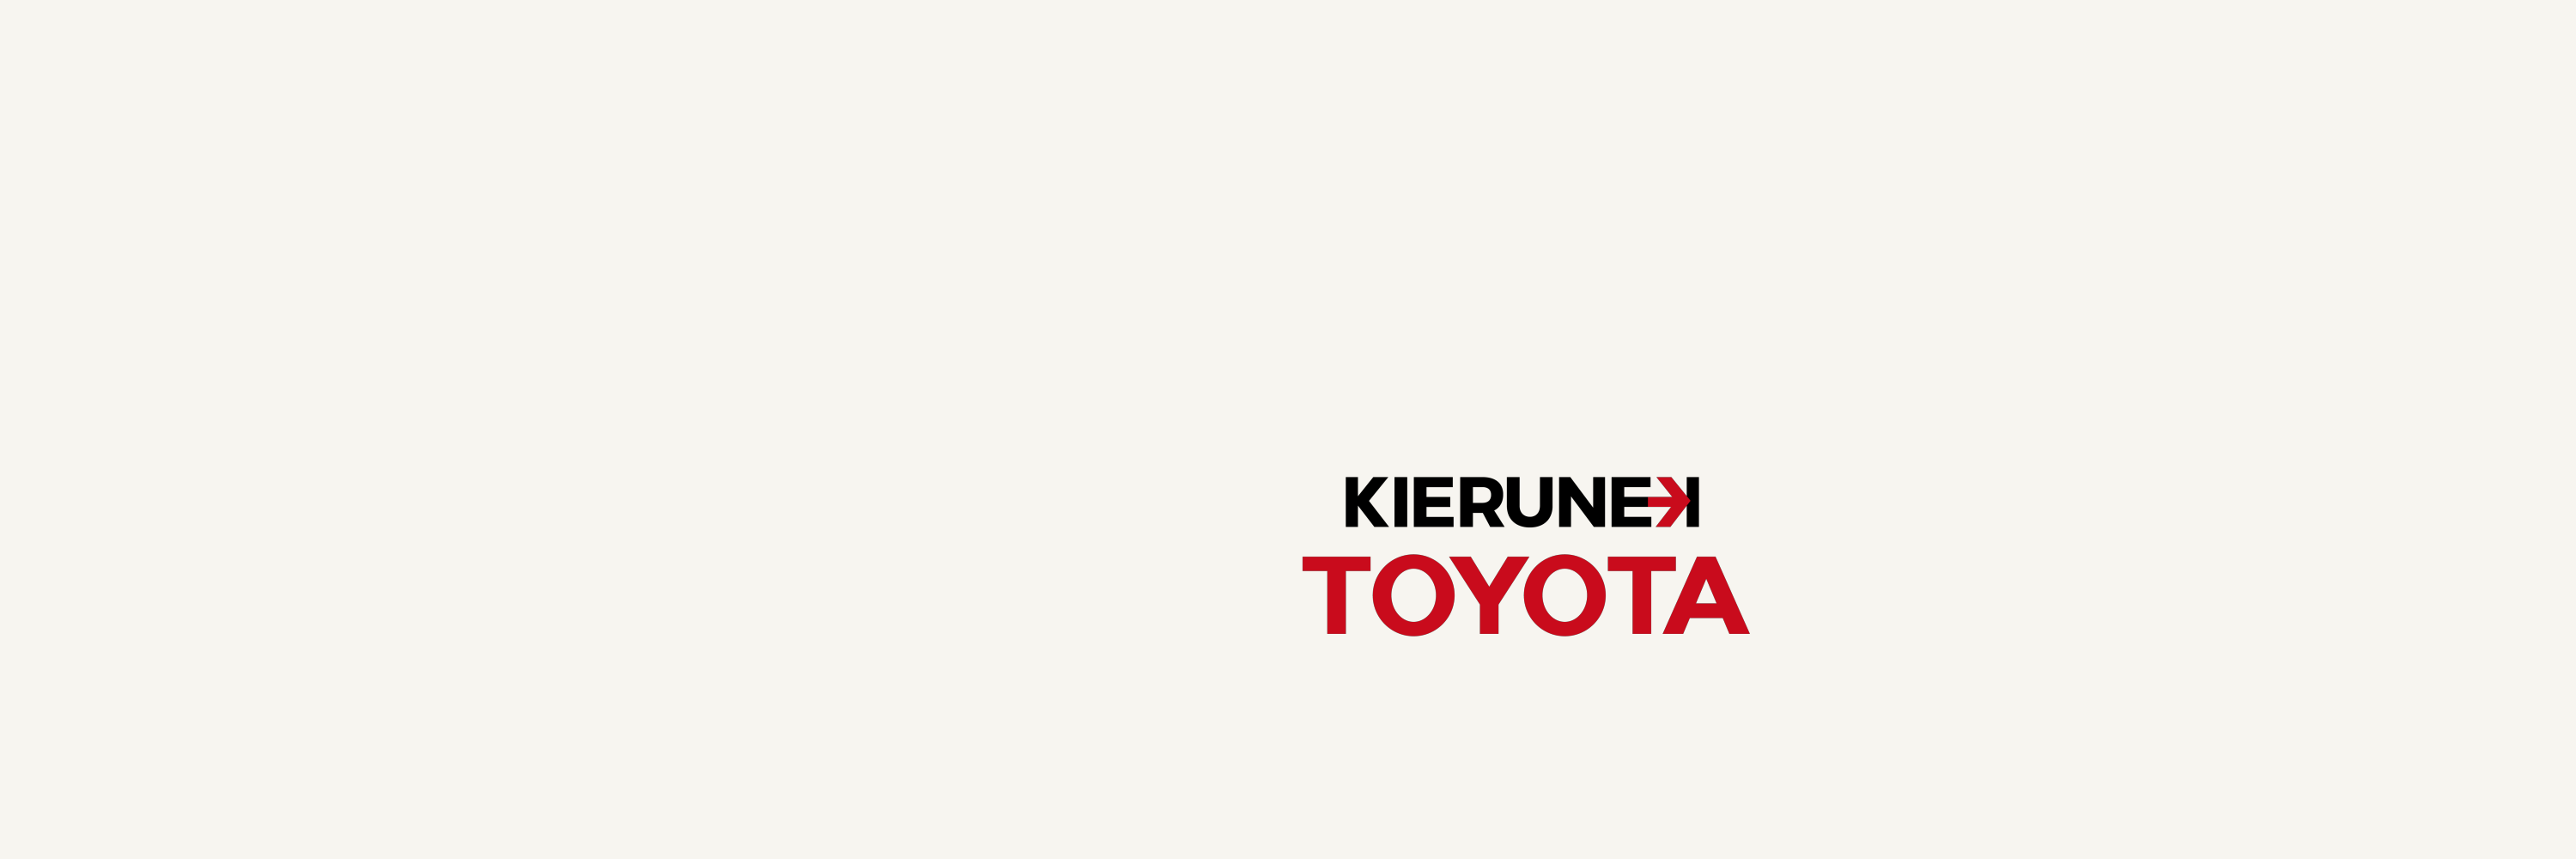 Kierunek Toyota